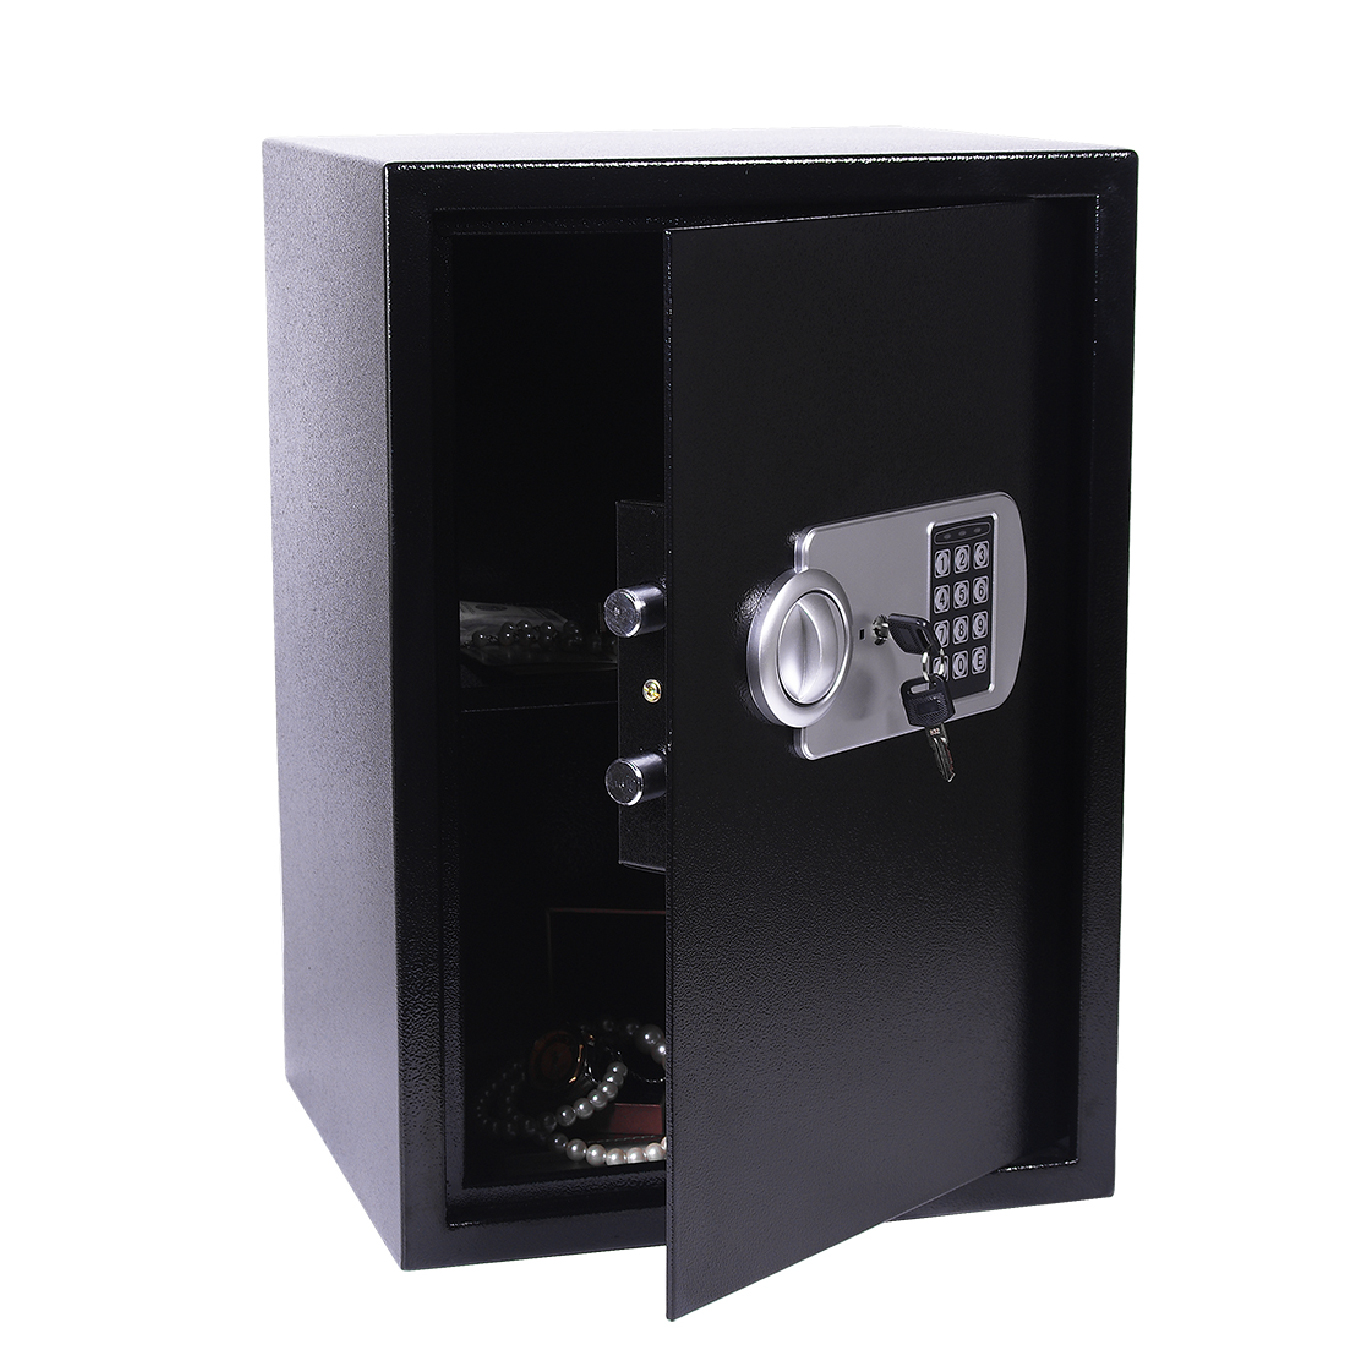 LockWell Electronic Safe, Digital Lock With 3 Led Indicators, Blackcolors, 50EL